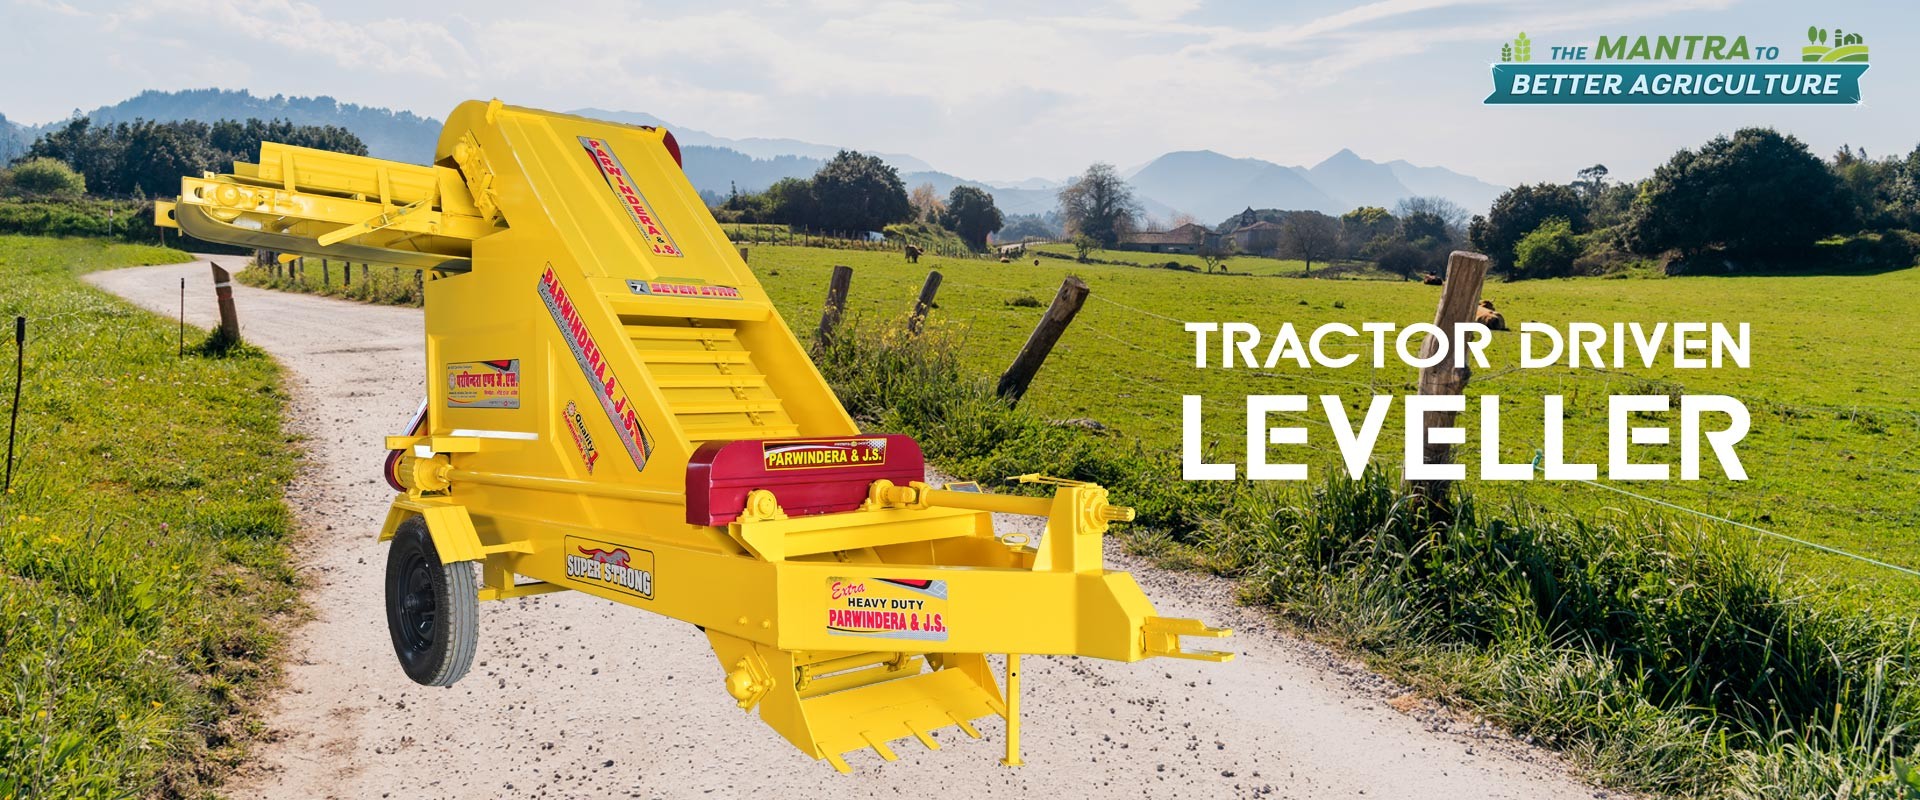 Tractor Driven Leveller Slide